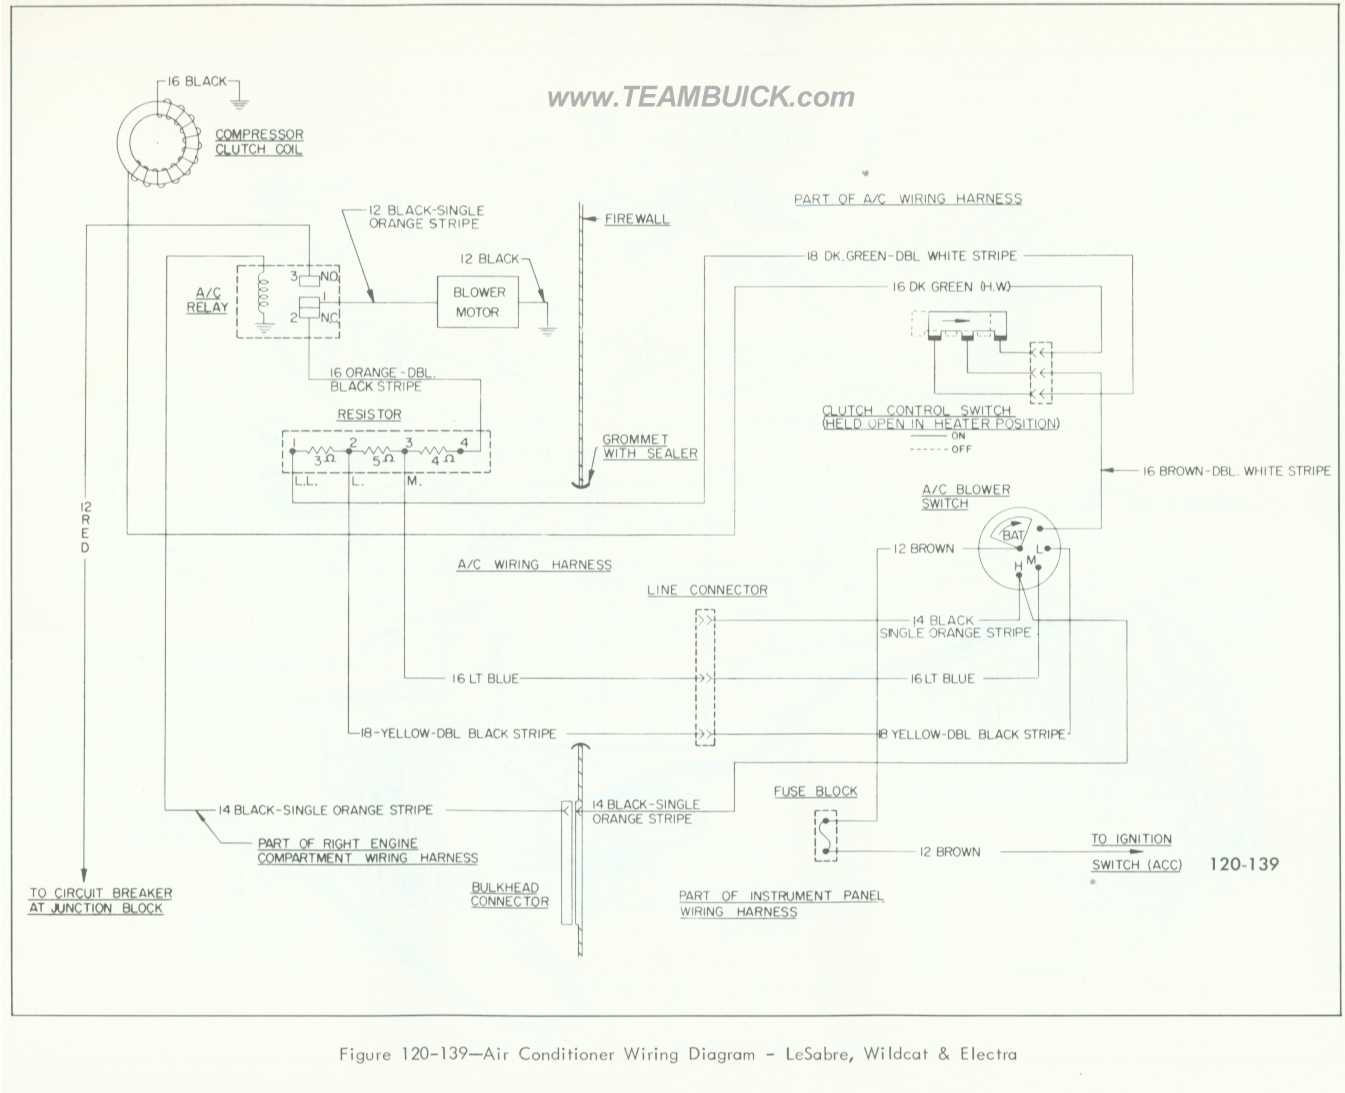 1966 Buick LeSabre, Wildcat, Electra, Air Conditioner Wiring Diagram